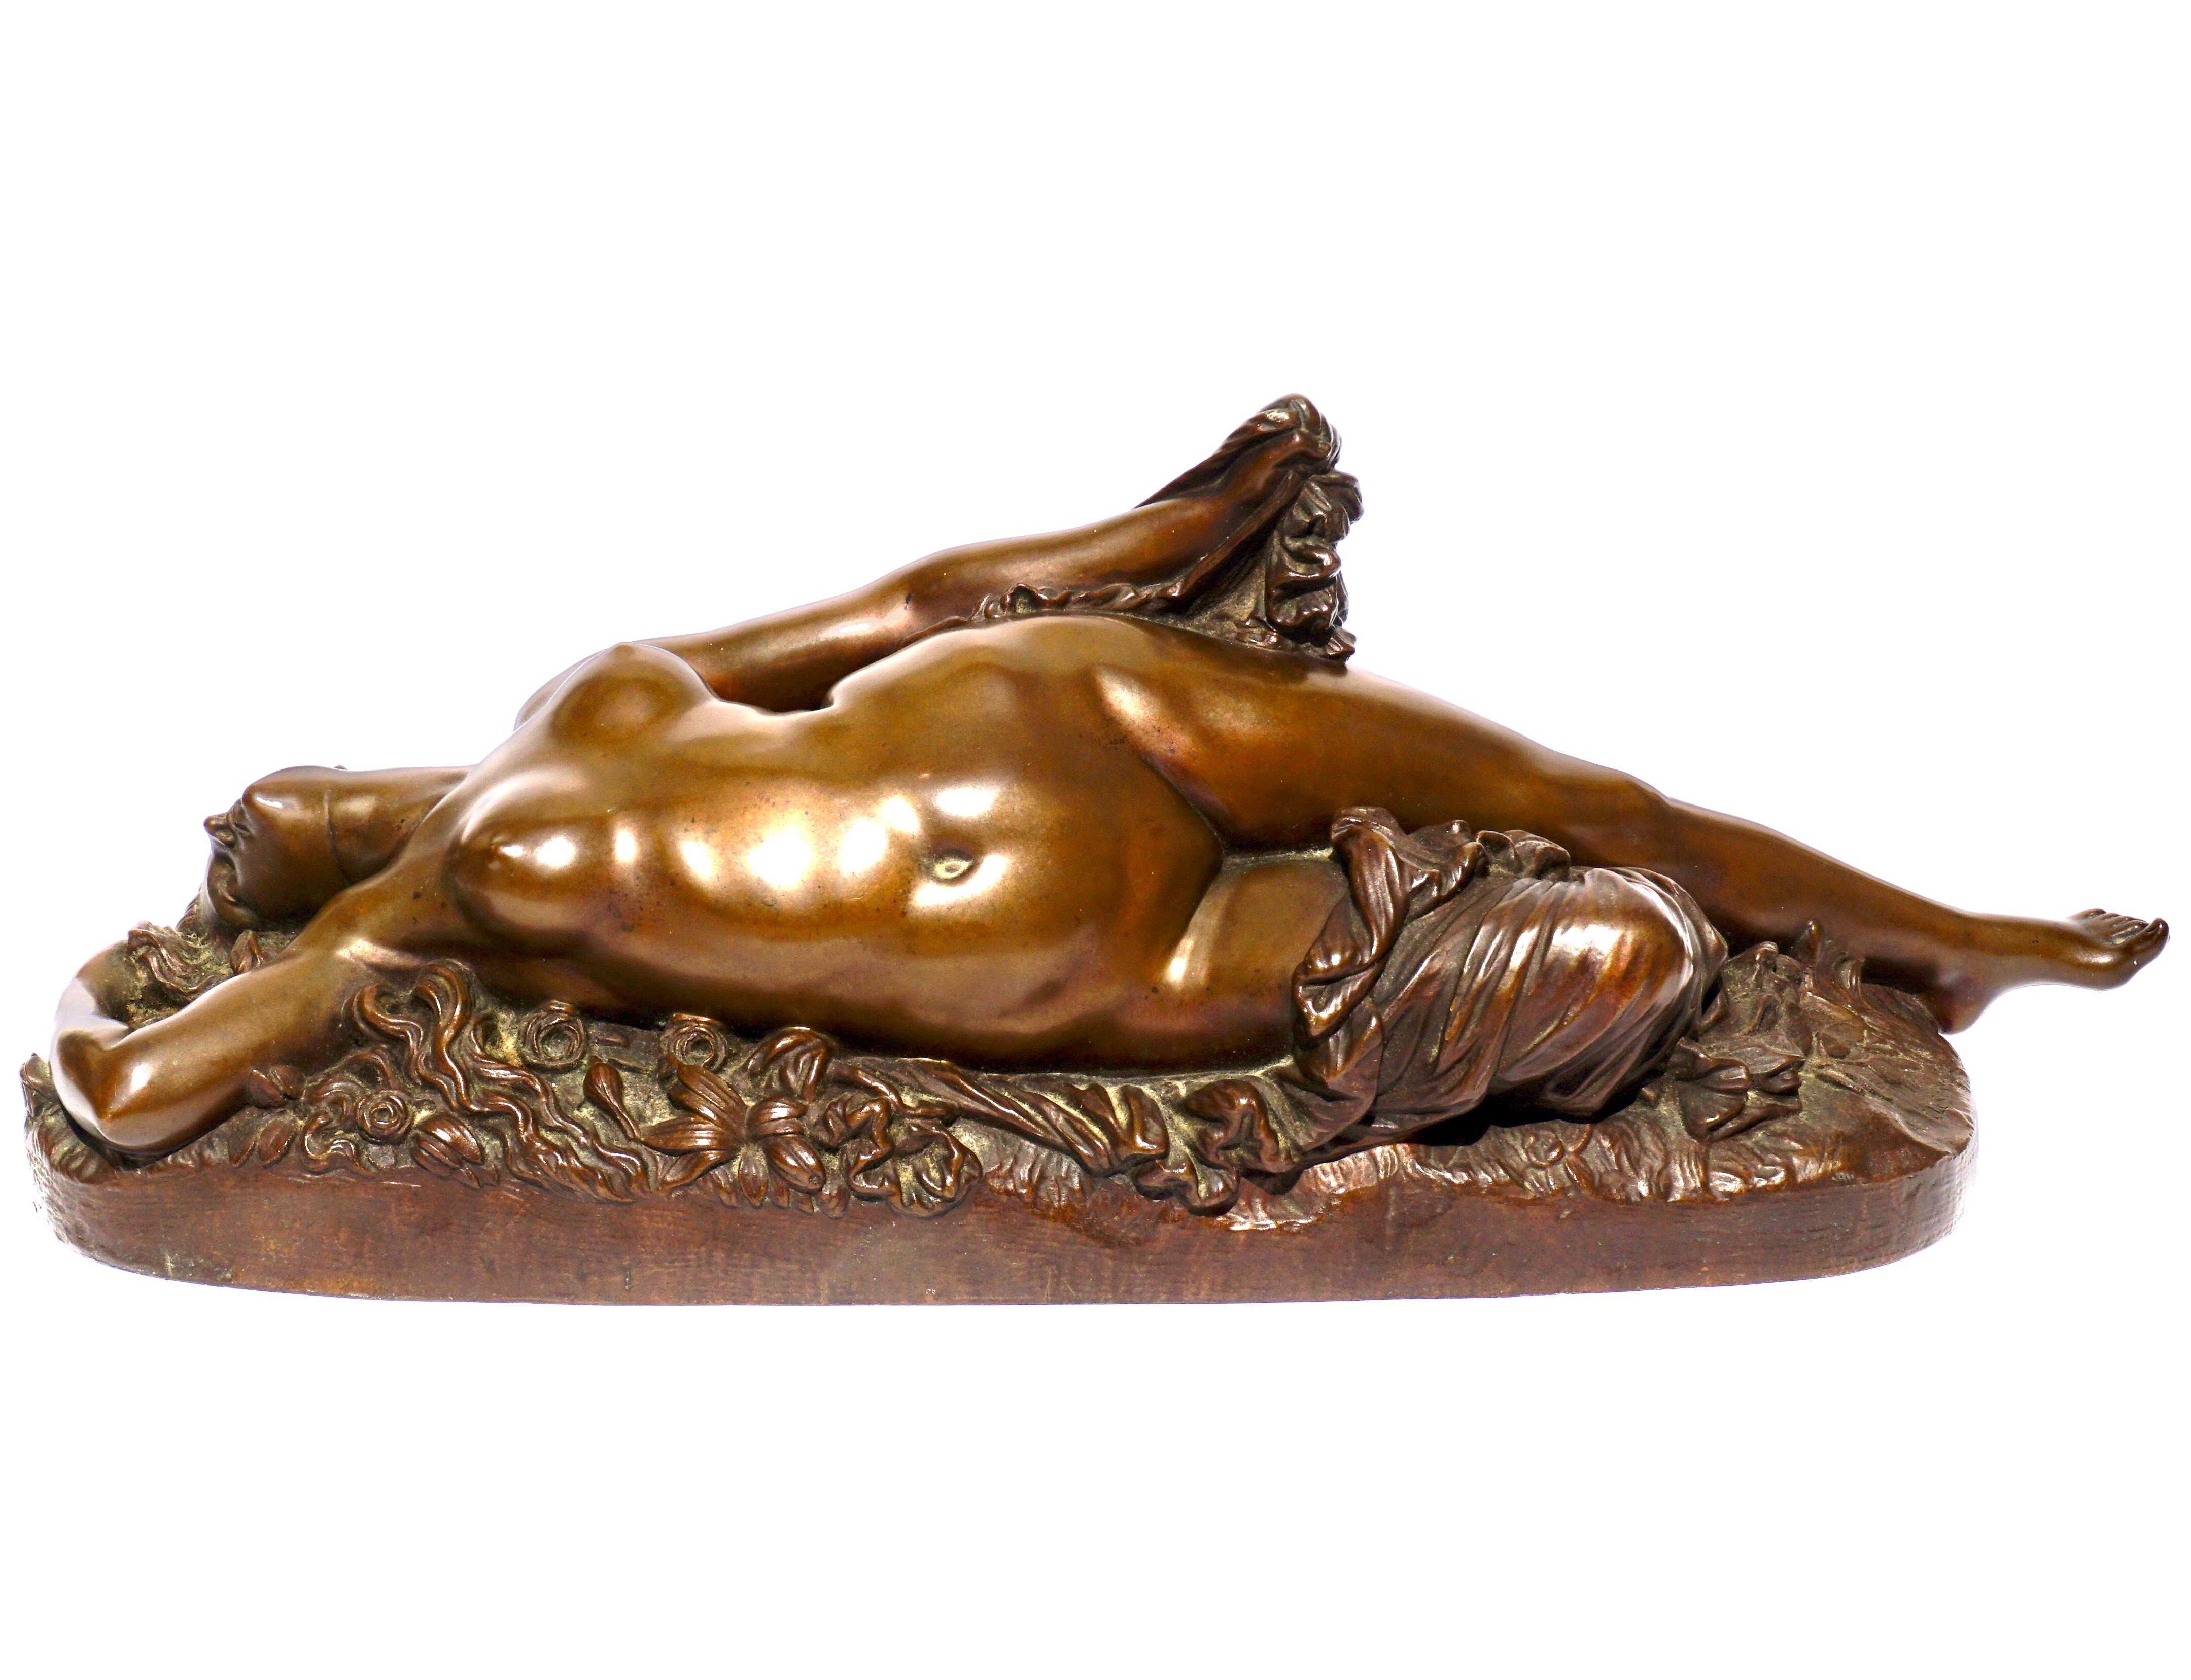 JEAN-BAPSITSE AUGUSTE CLÉSINGER (FRENCH, 1814-1883)
Femme piquée par un serpent
Inscribed J. CLESINGER and F. BARBEDIENNE. FONDEUR
Bronze, dark brown patina
8 in. (20.3 cm.) high, 22 ½ in. (57.1 cm.) wide
Condition: Excellent 
Circa